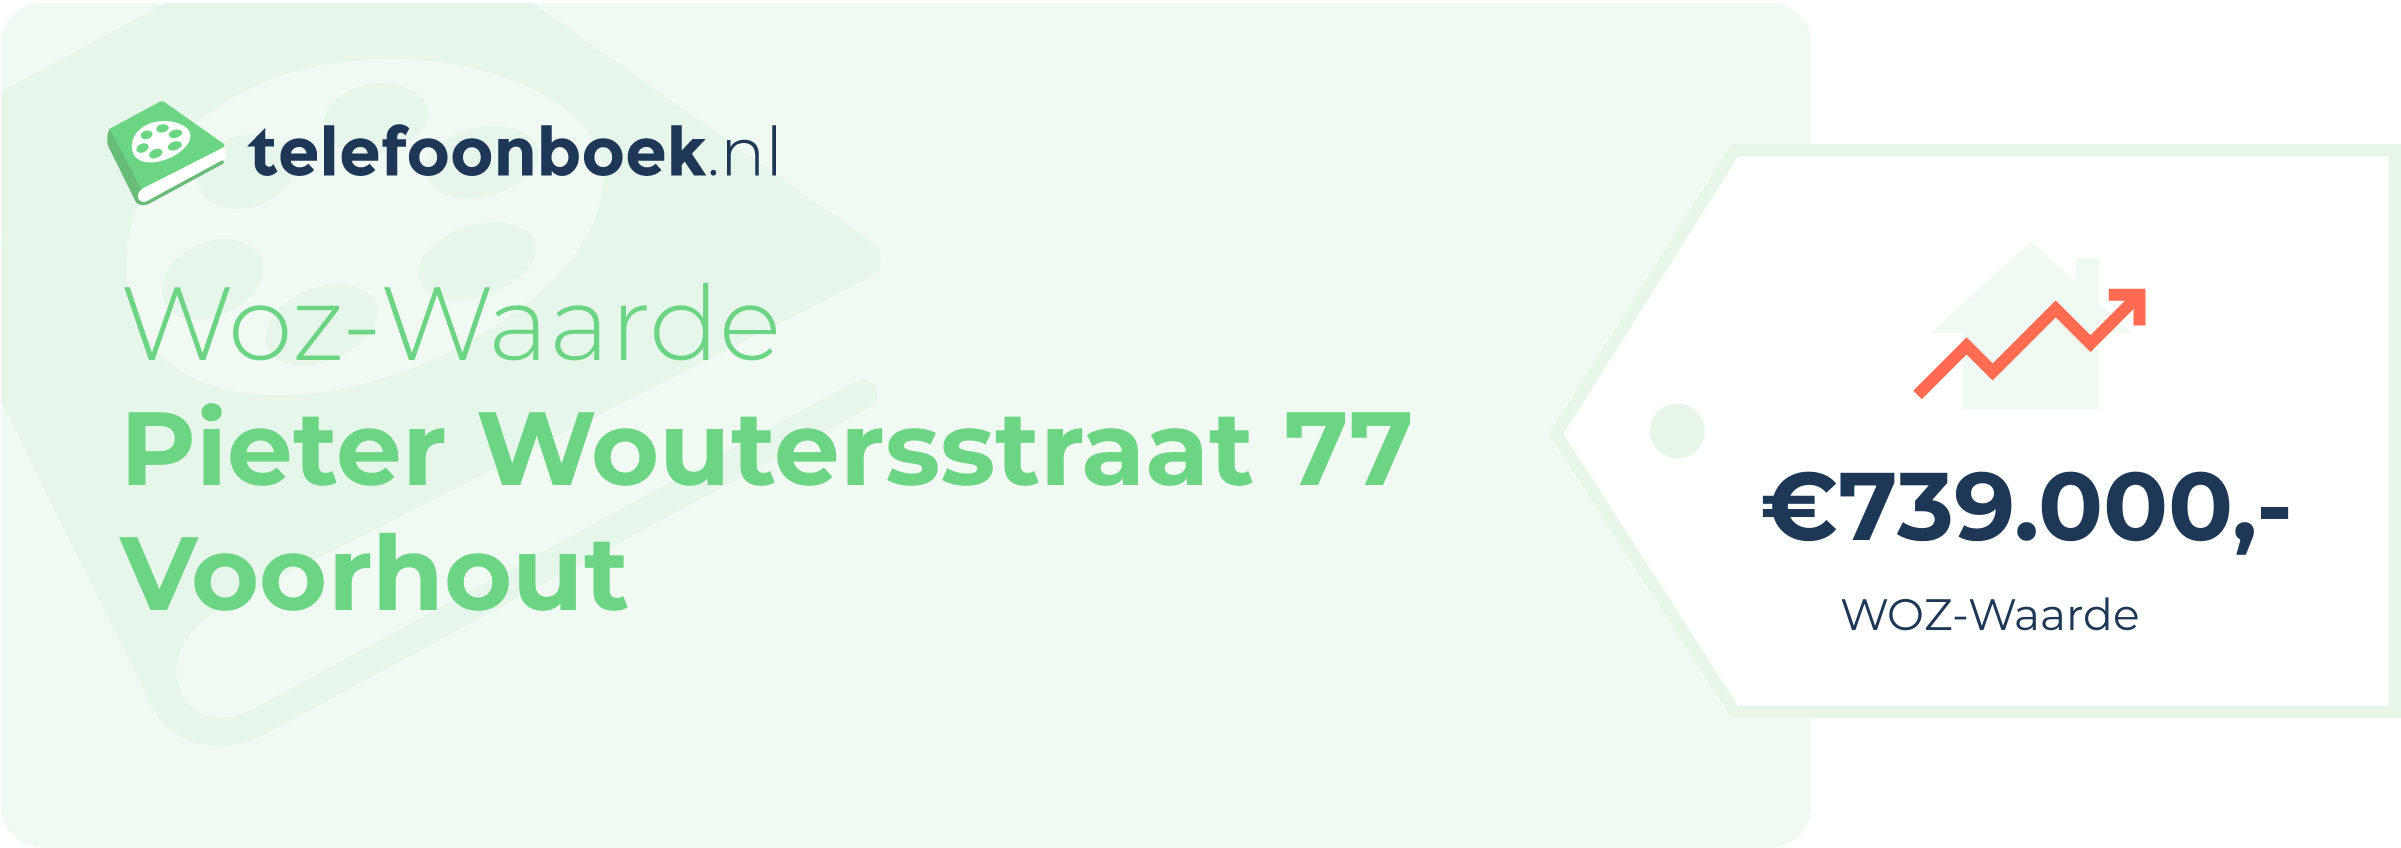 WOZ-waarde Pieter Woutersstraat 77 Voorhout